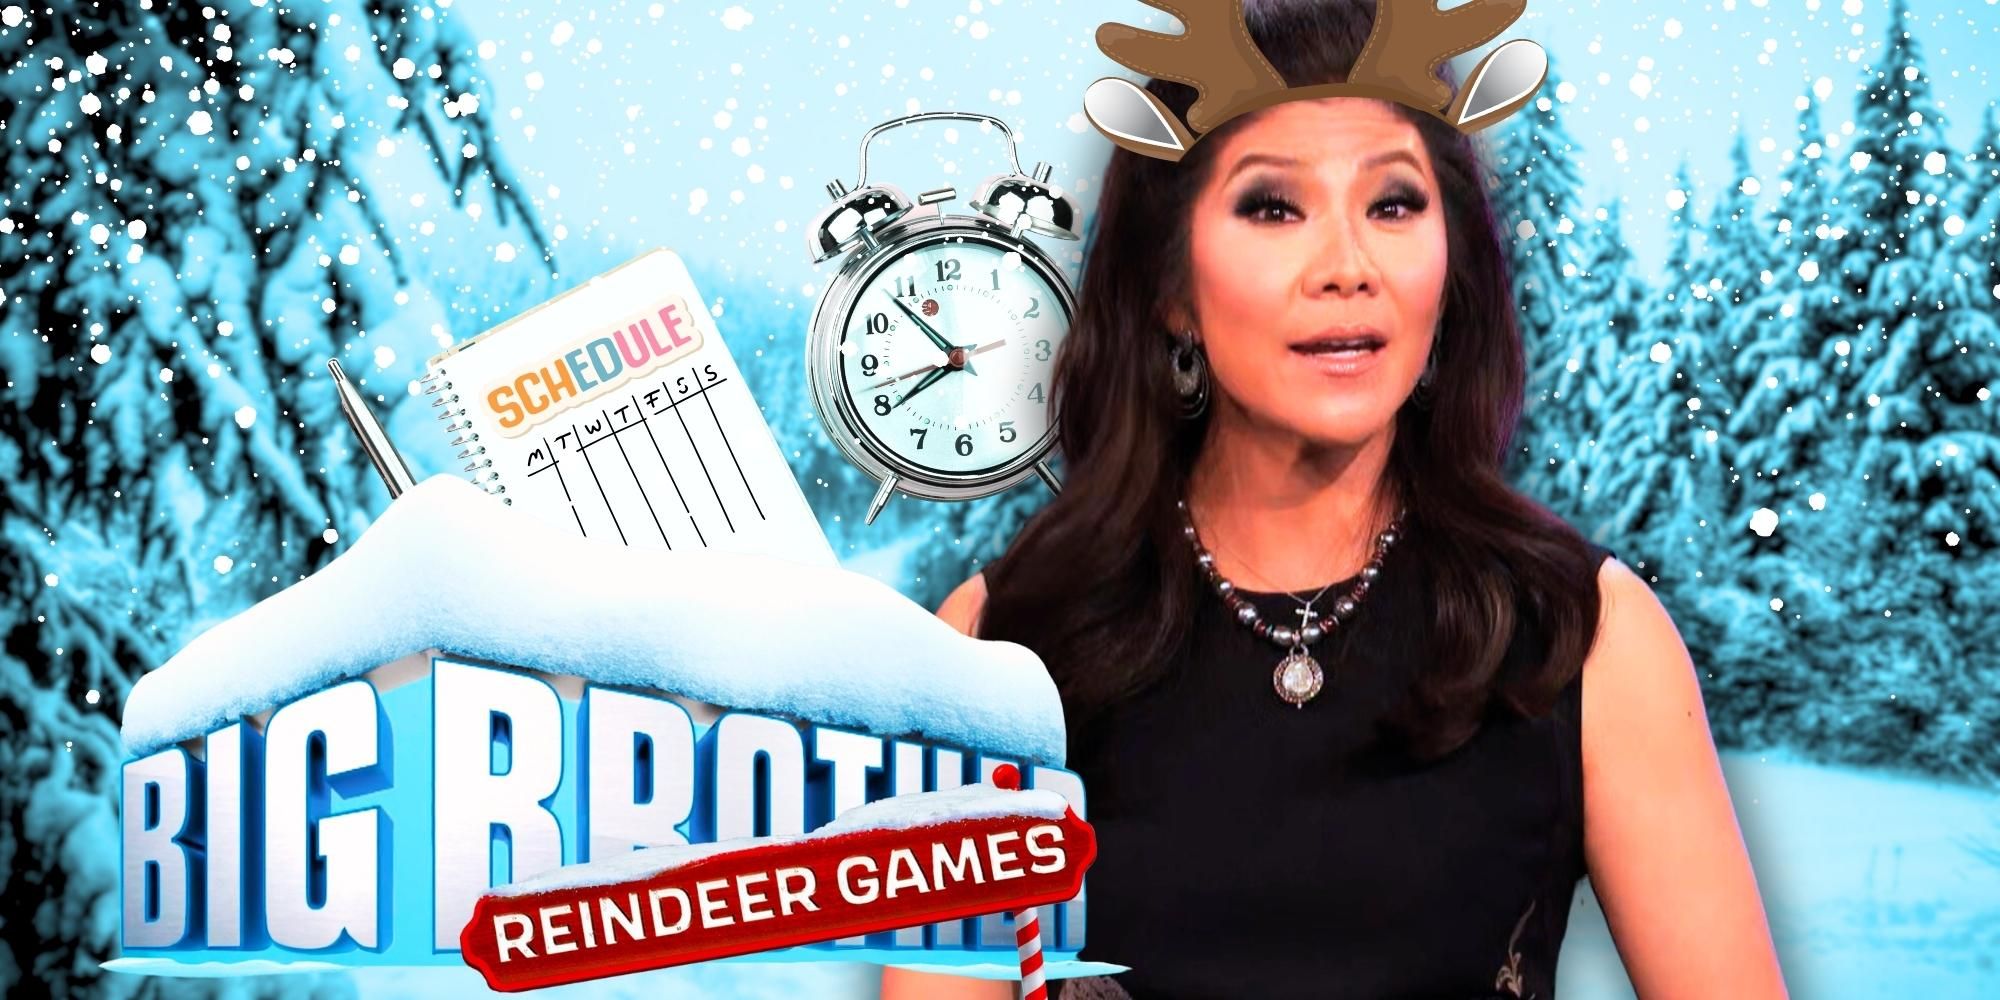 Big Brother Reindeer Games on CBS